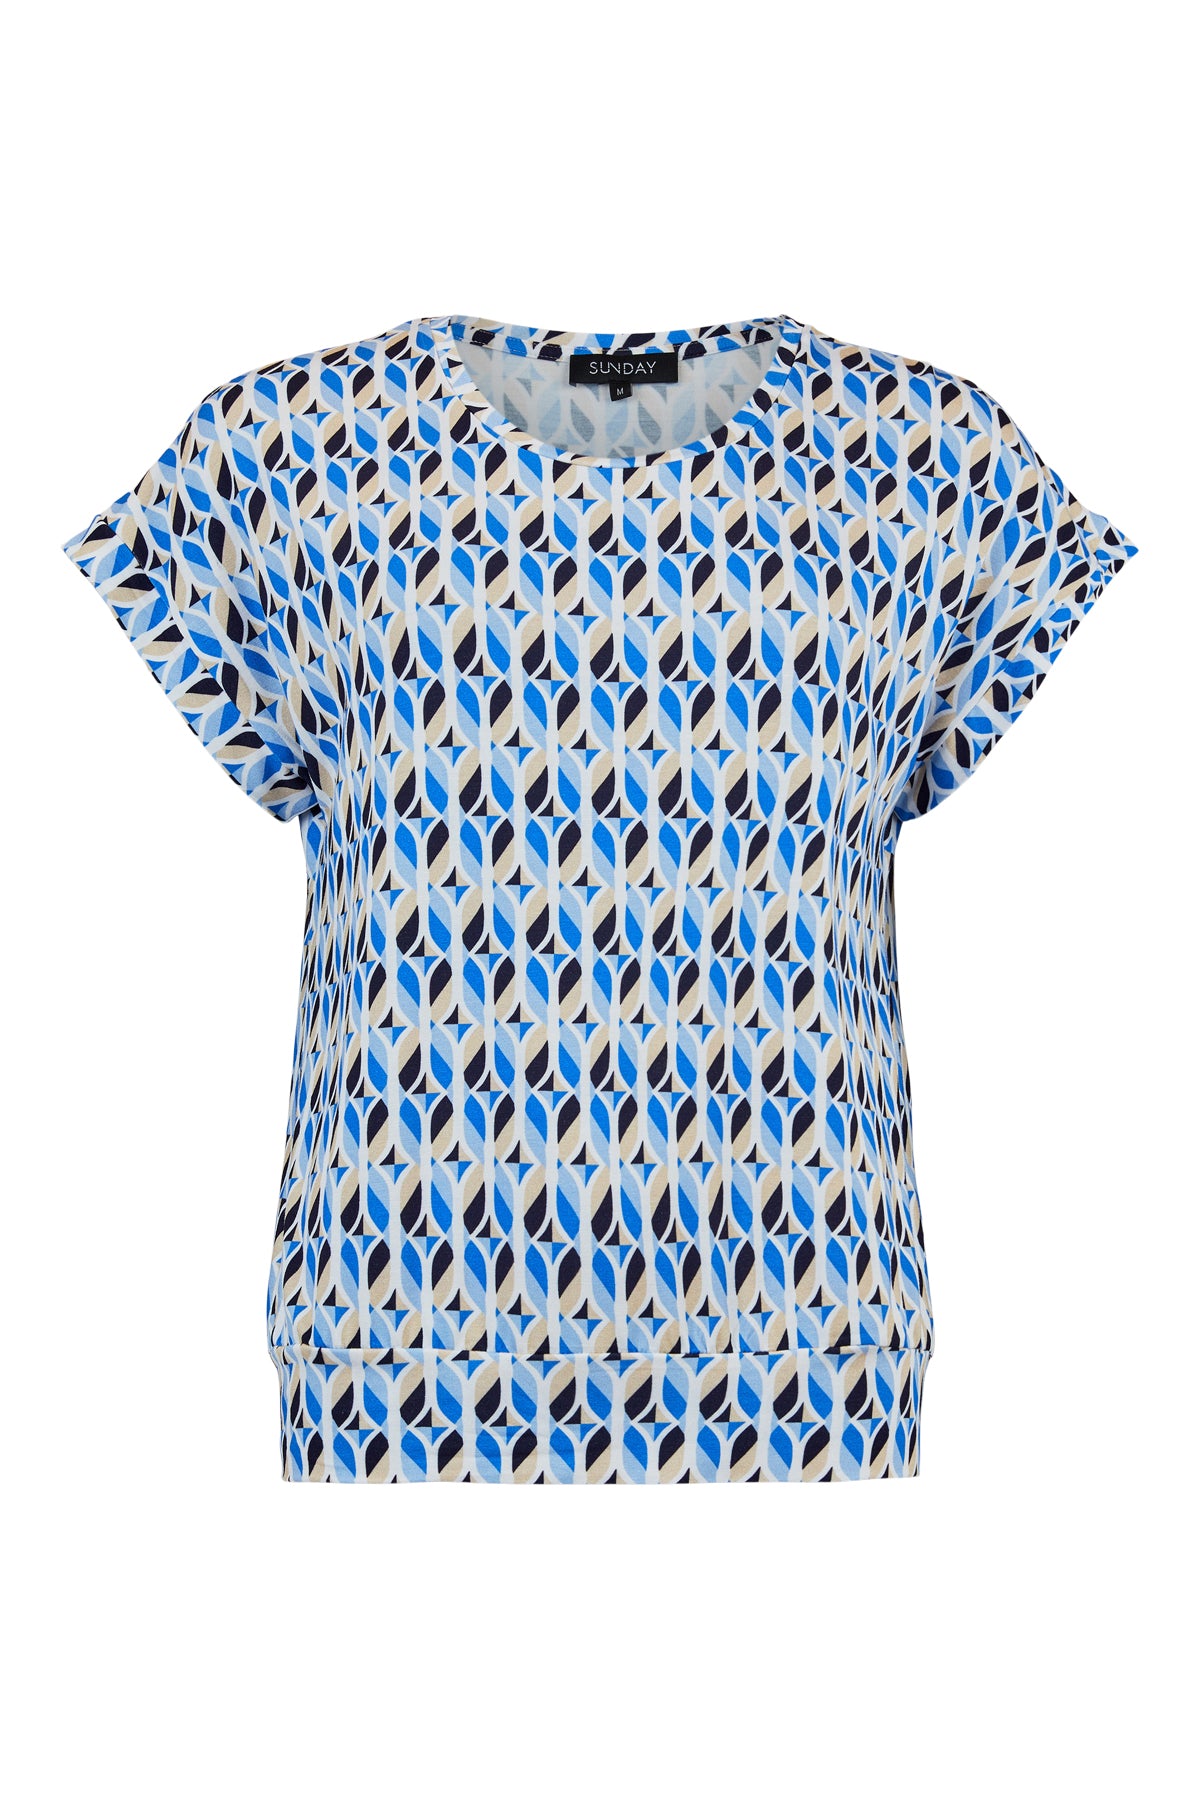 Sunday Beige, Cream and Blue Print Luxury T-Shirt